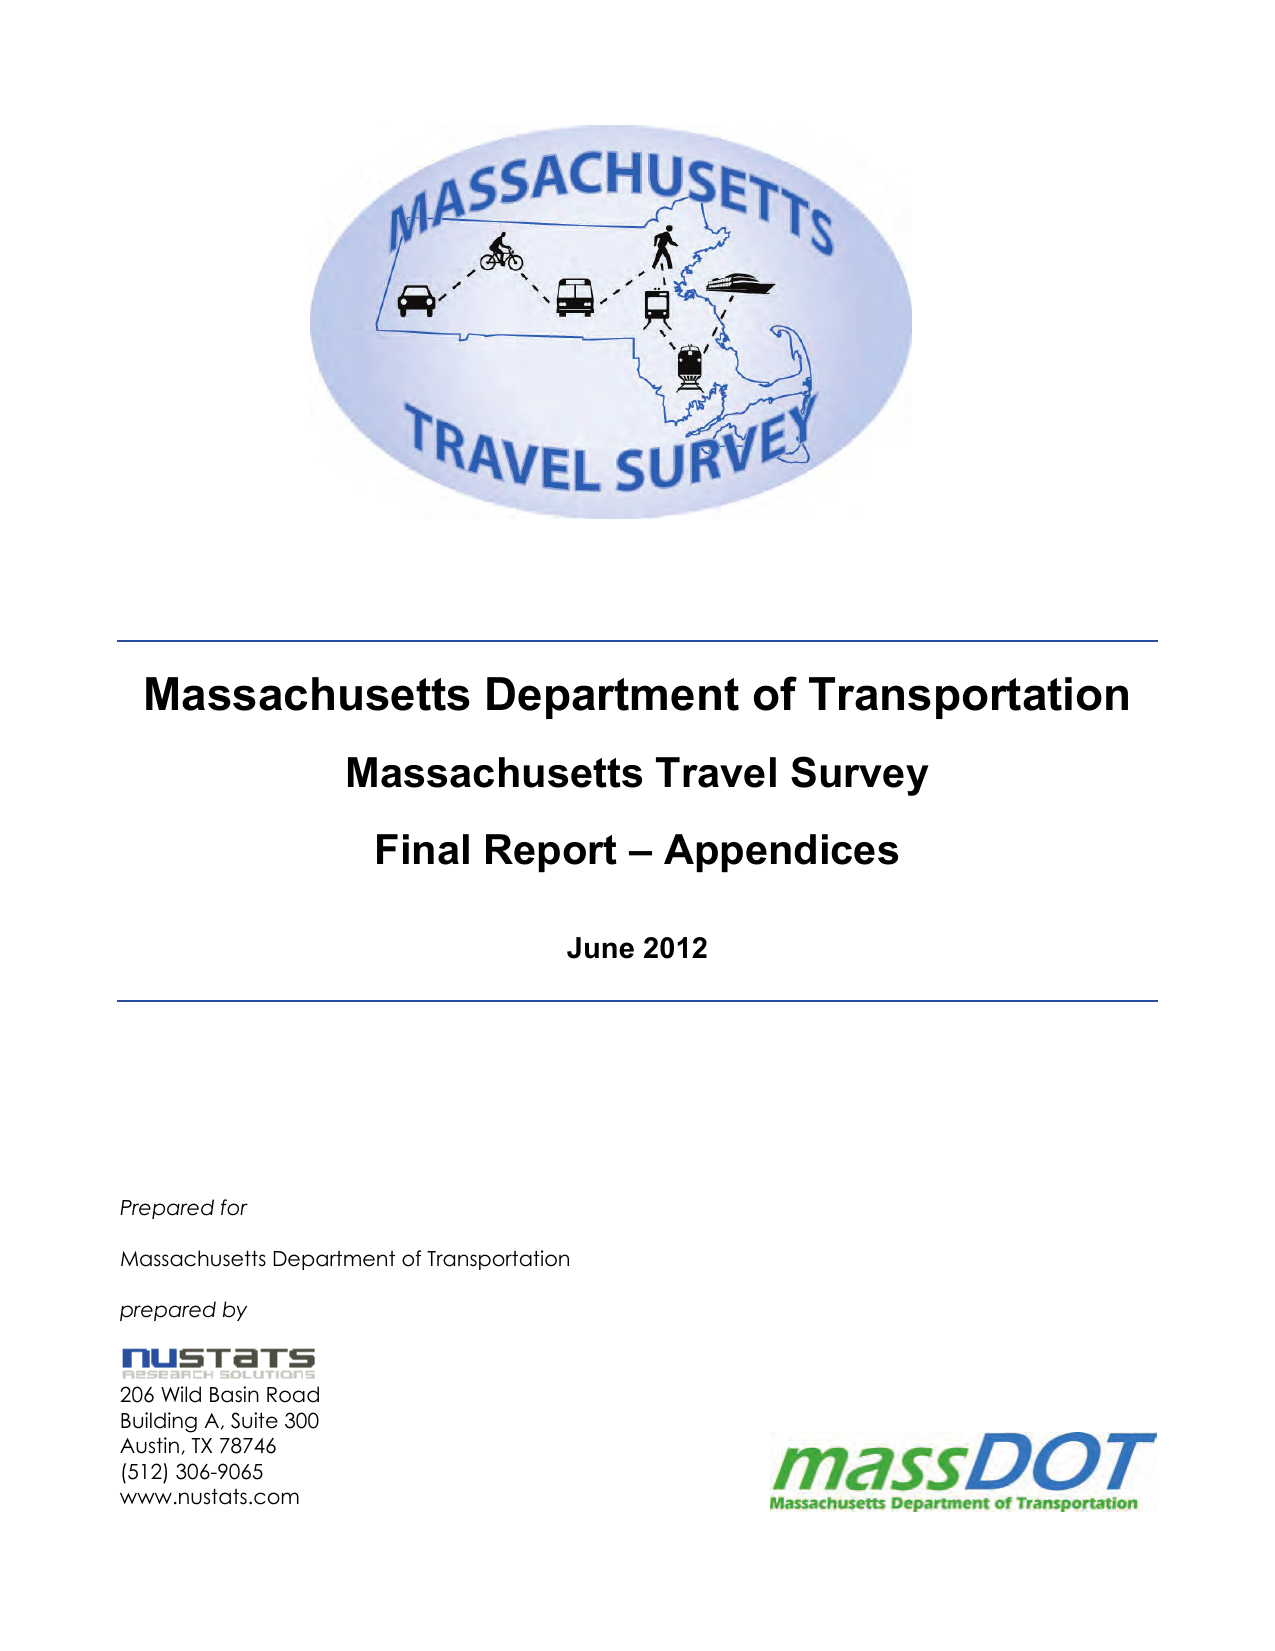 massachusetts travel survey